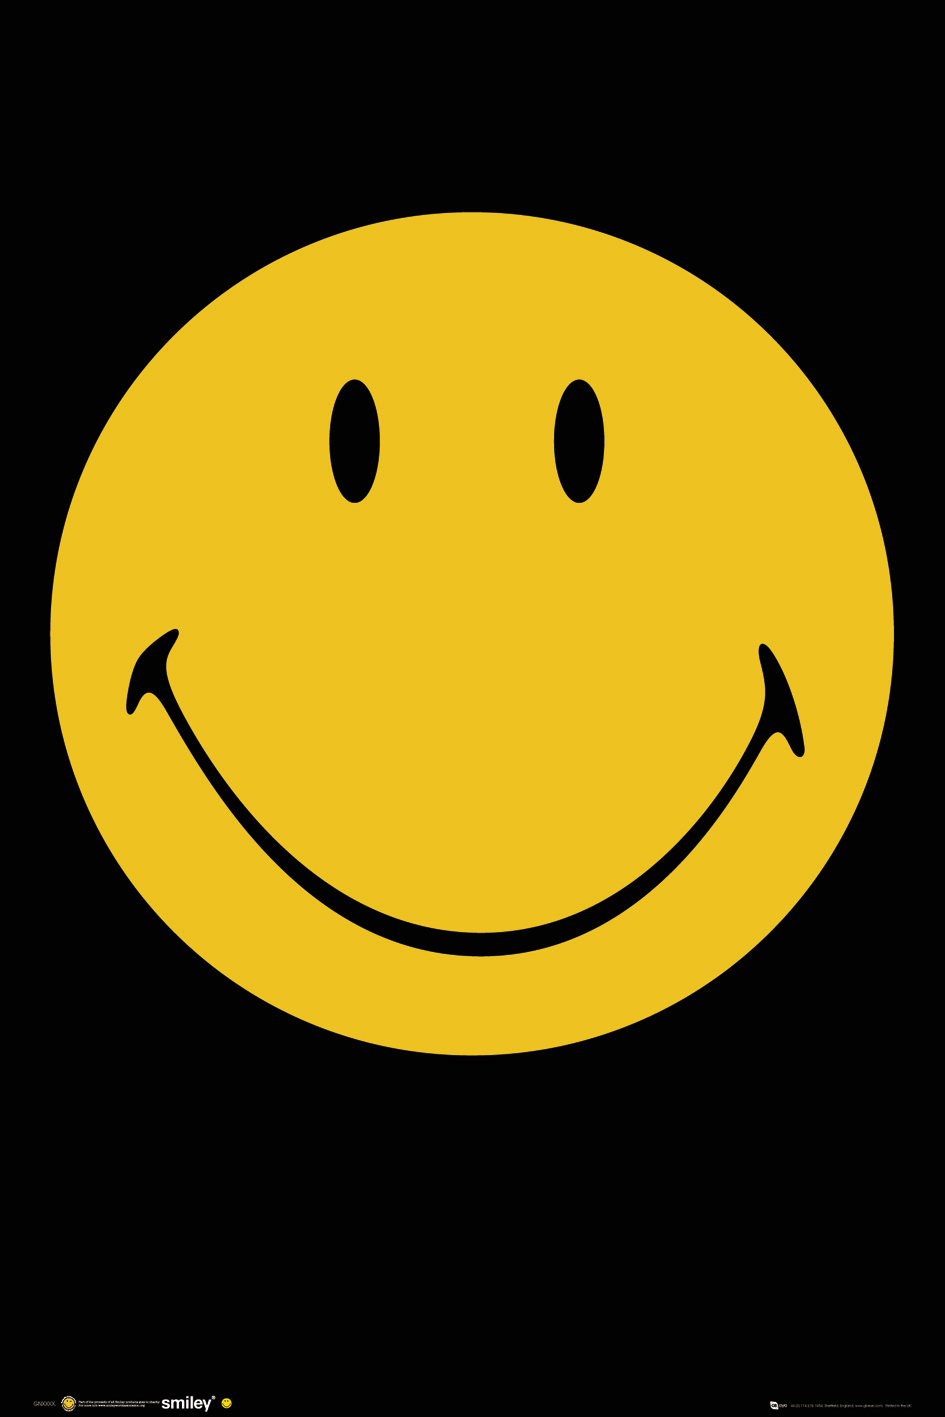 Download 38+ Nirvana Smiley Face Wallpaper on WallpaperSafari